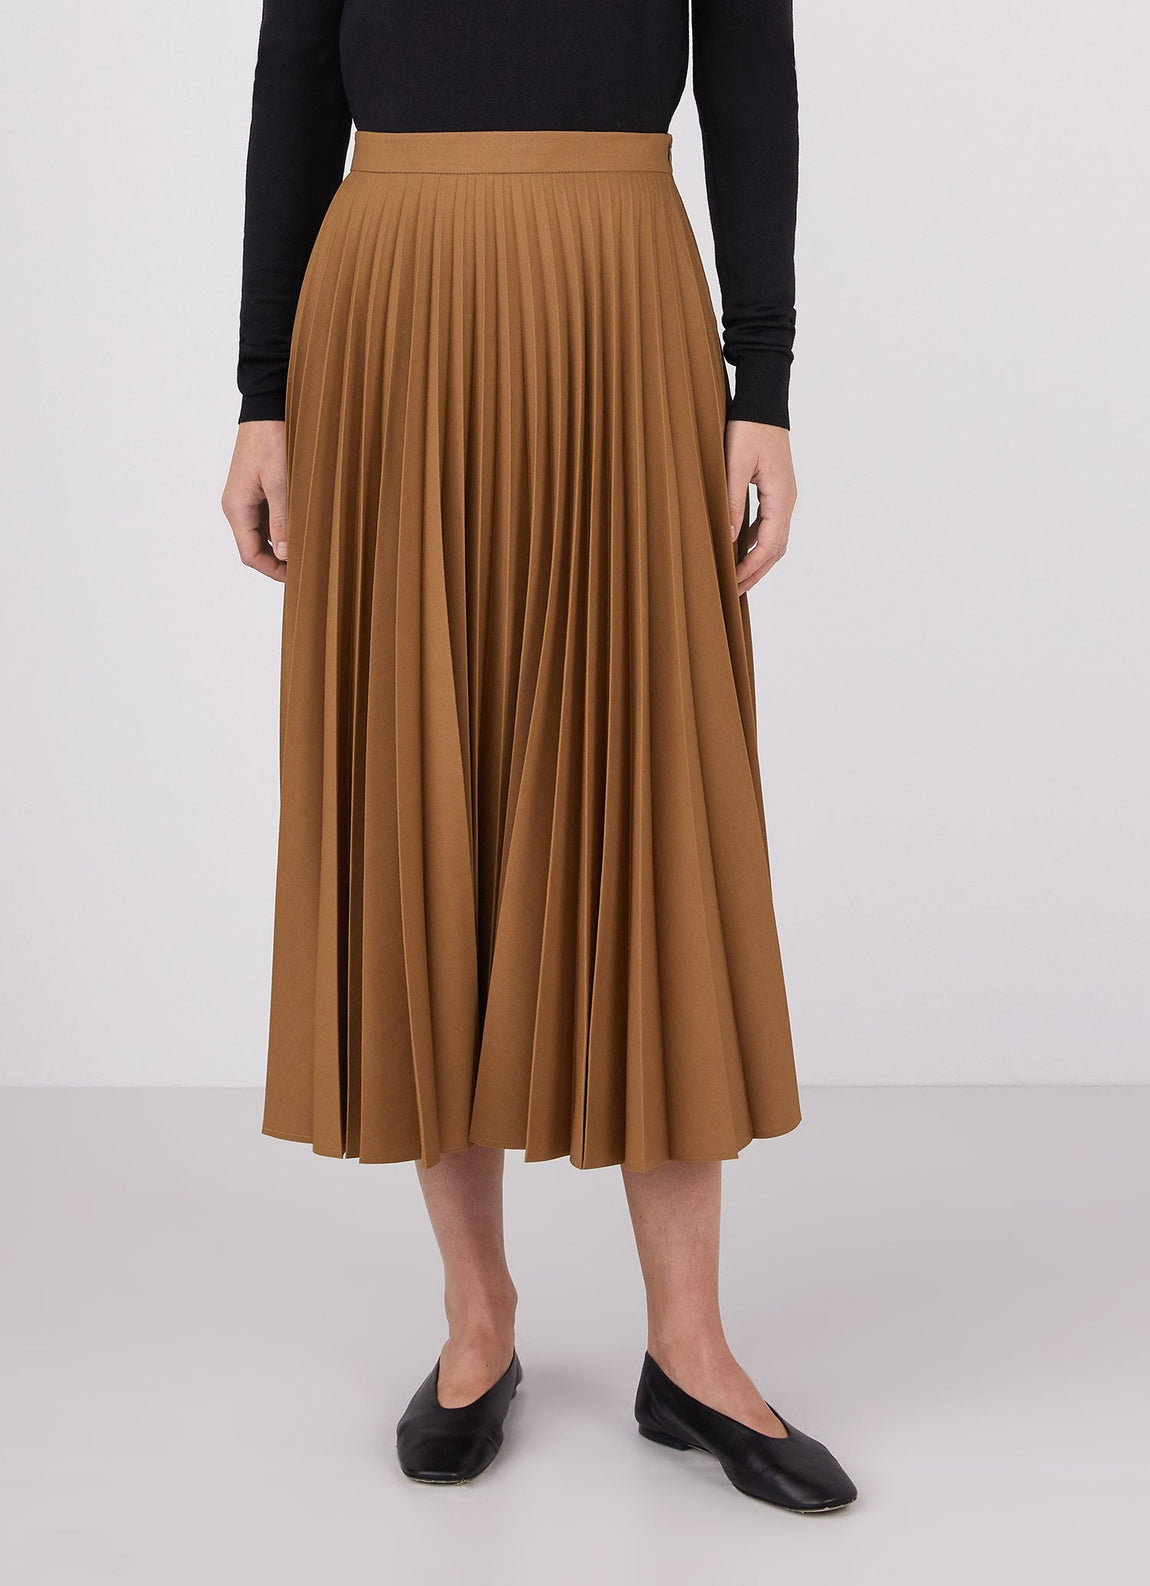 Women's Pleated Skirt in Dark Tan